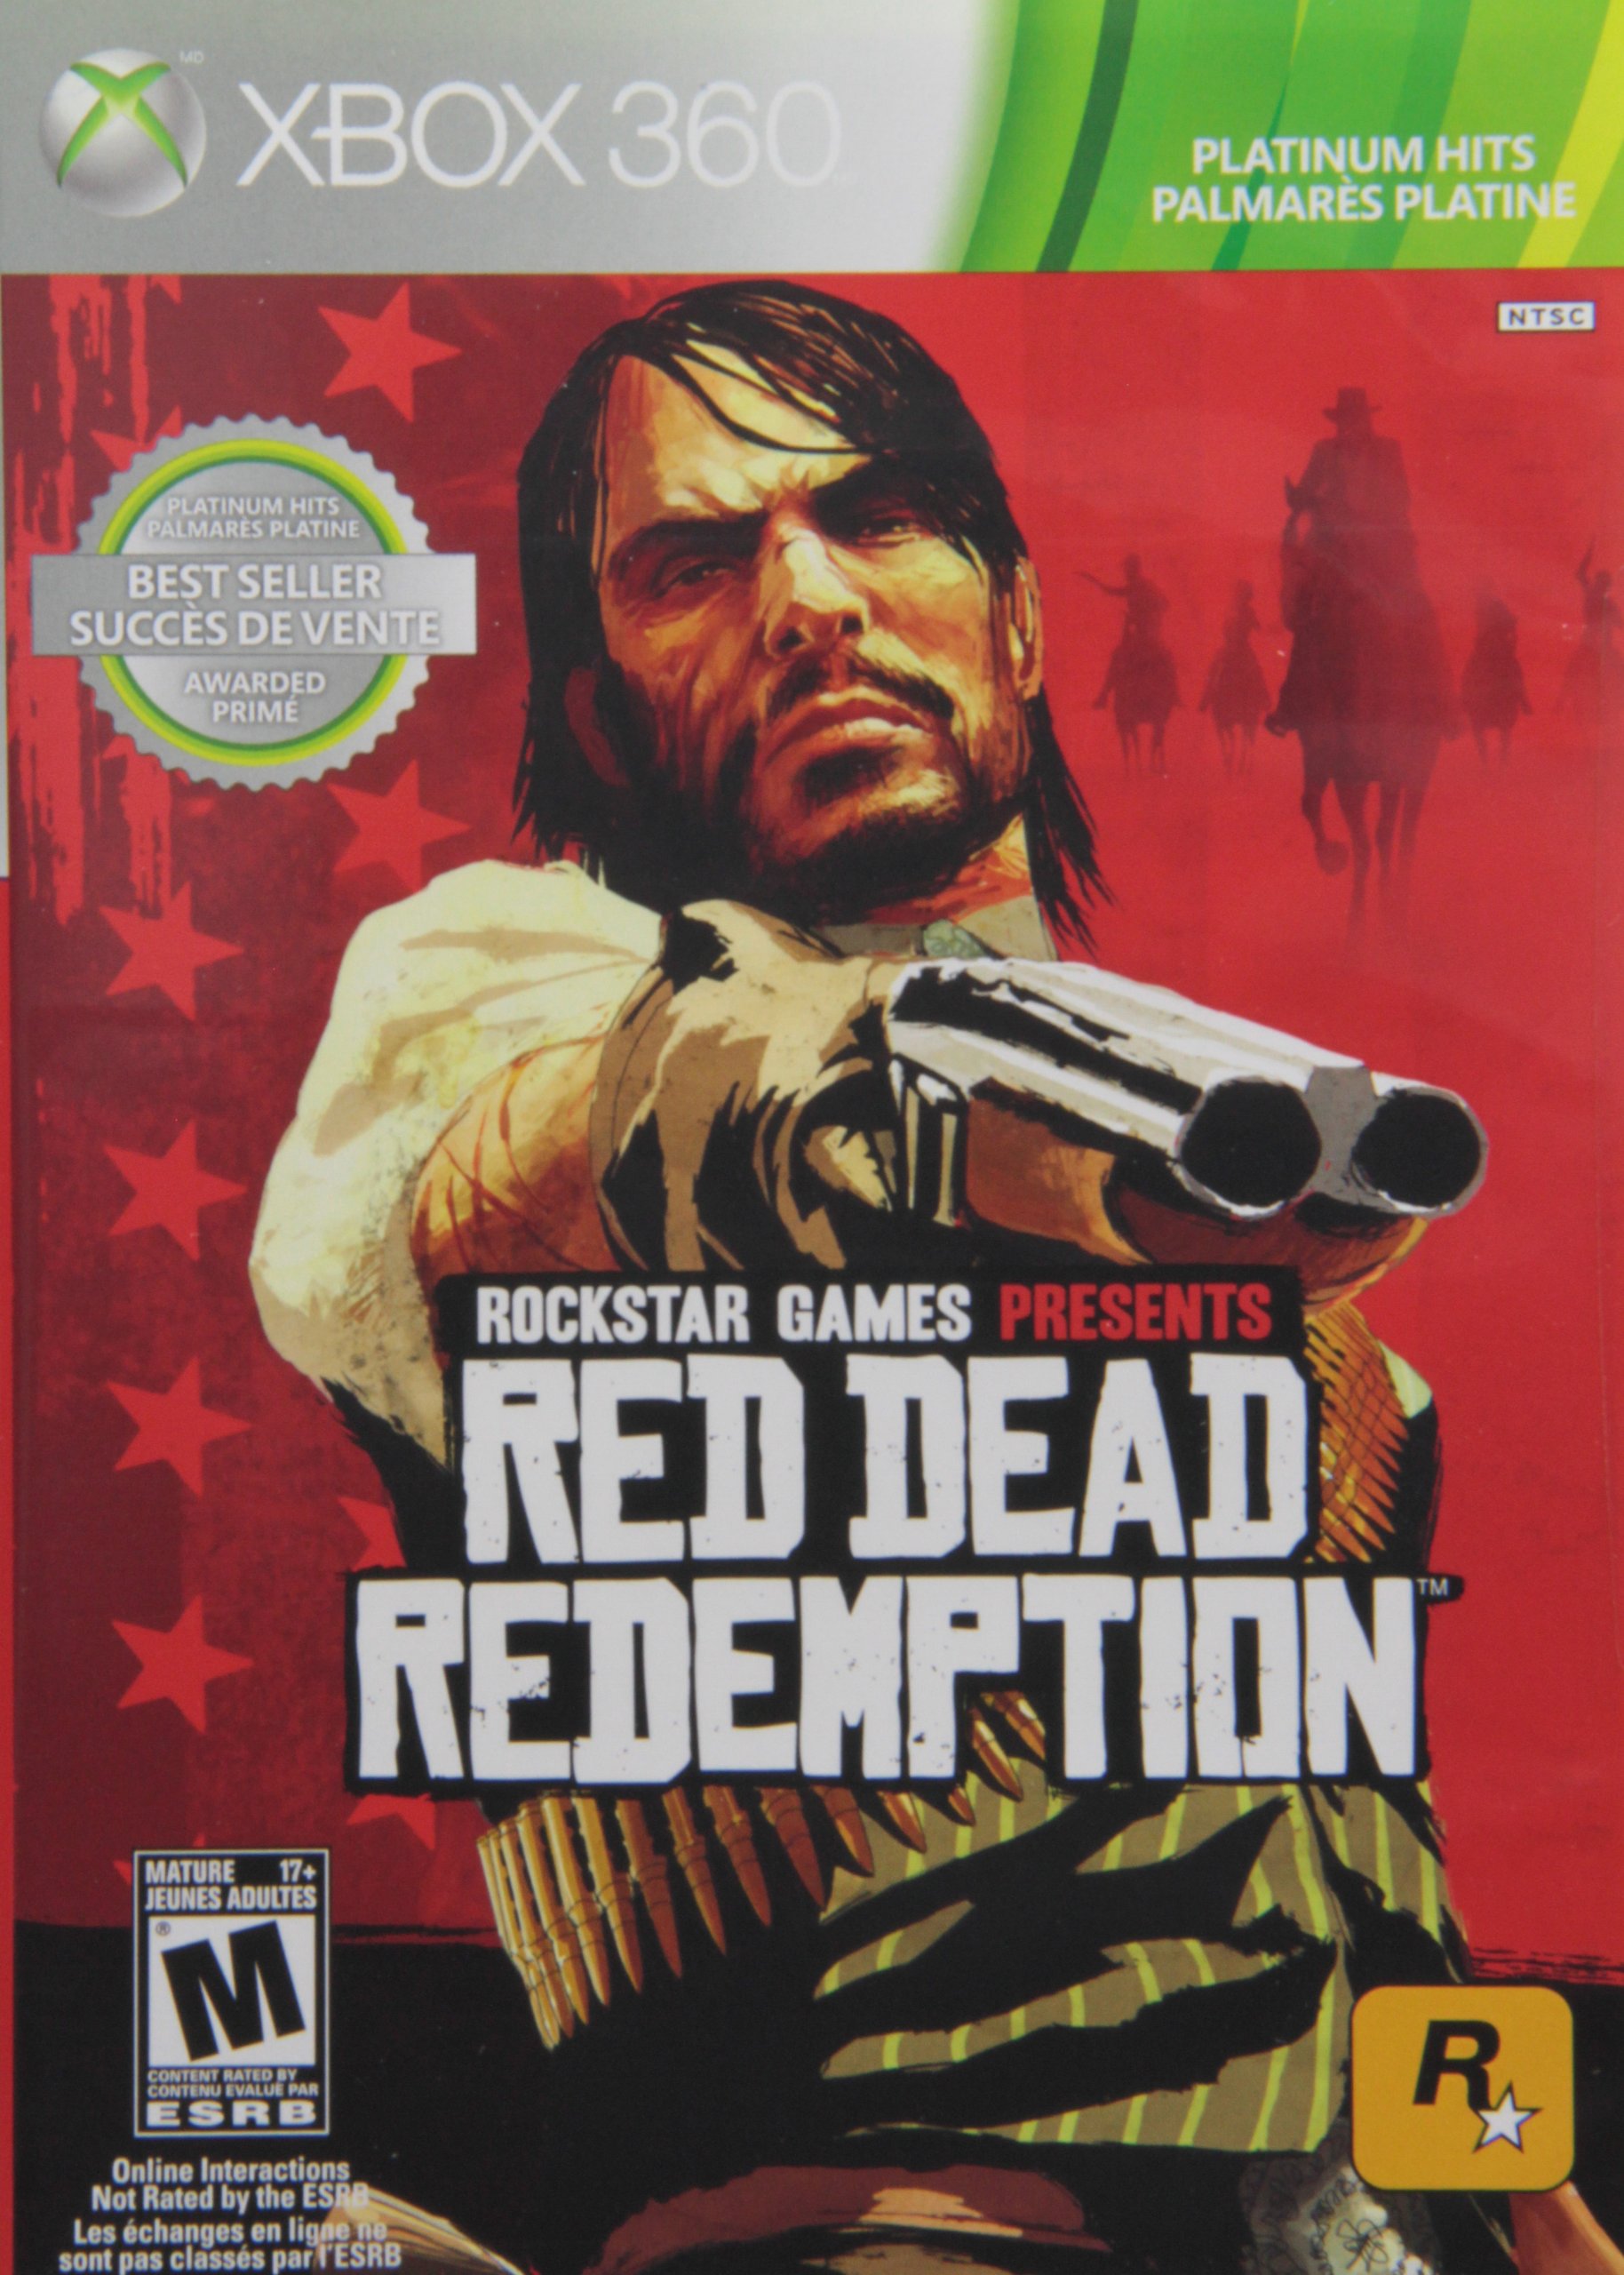 Red dead redemption xbox купить. Red Dead Redemption диск Xbox 360. Red Dead Redemption 1 Xbox 360. Игра на Xbox 360 Red Dead Redemption. Ред дед редемпшн хбокс 360.